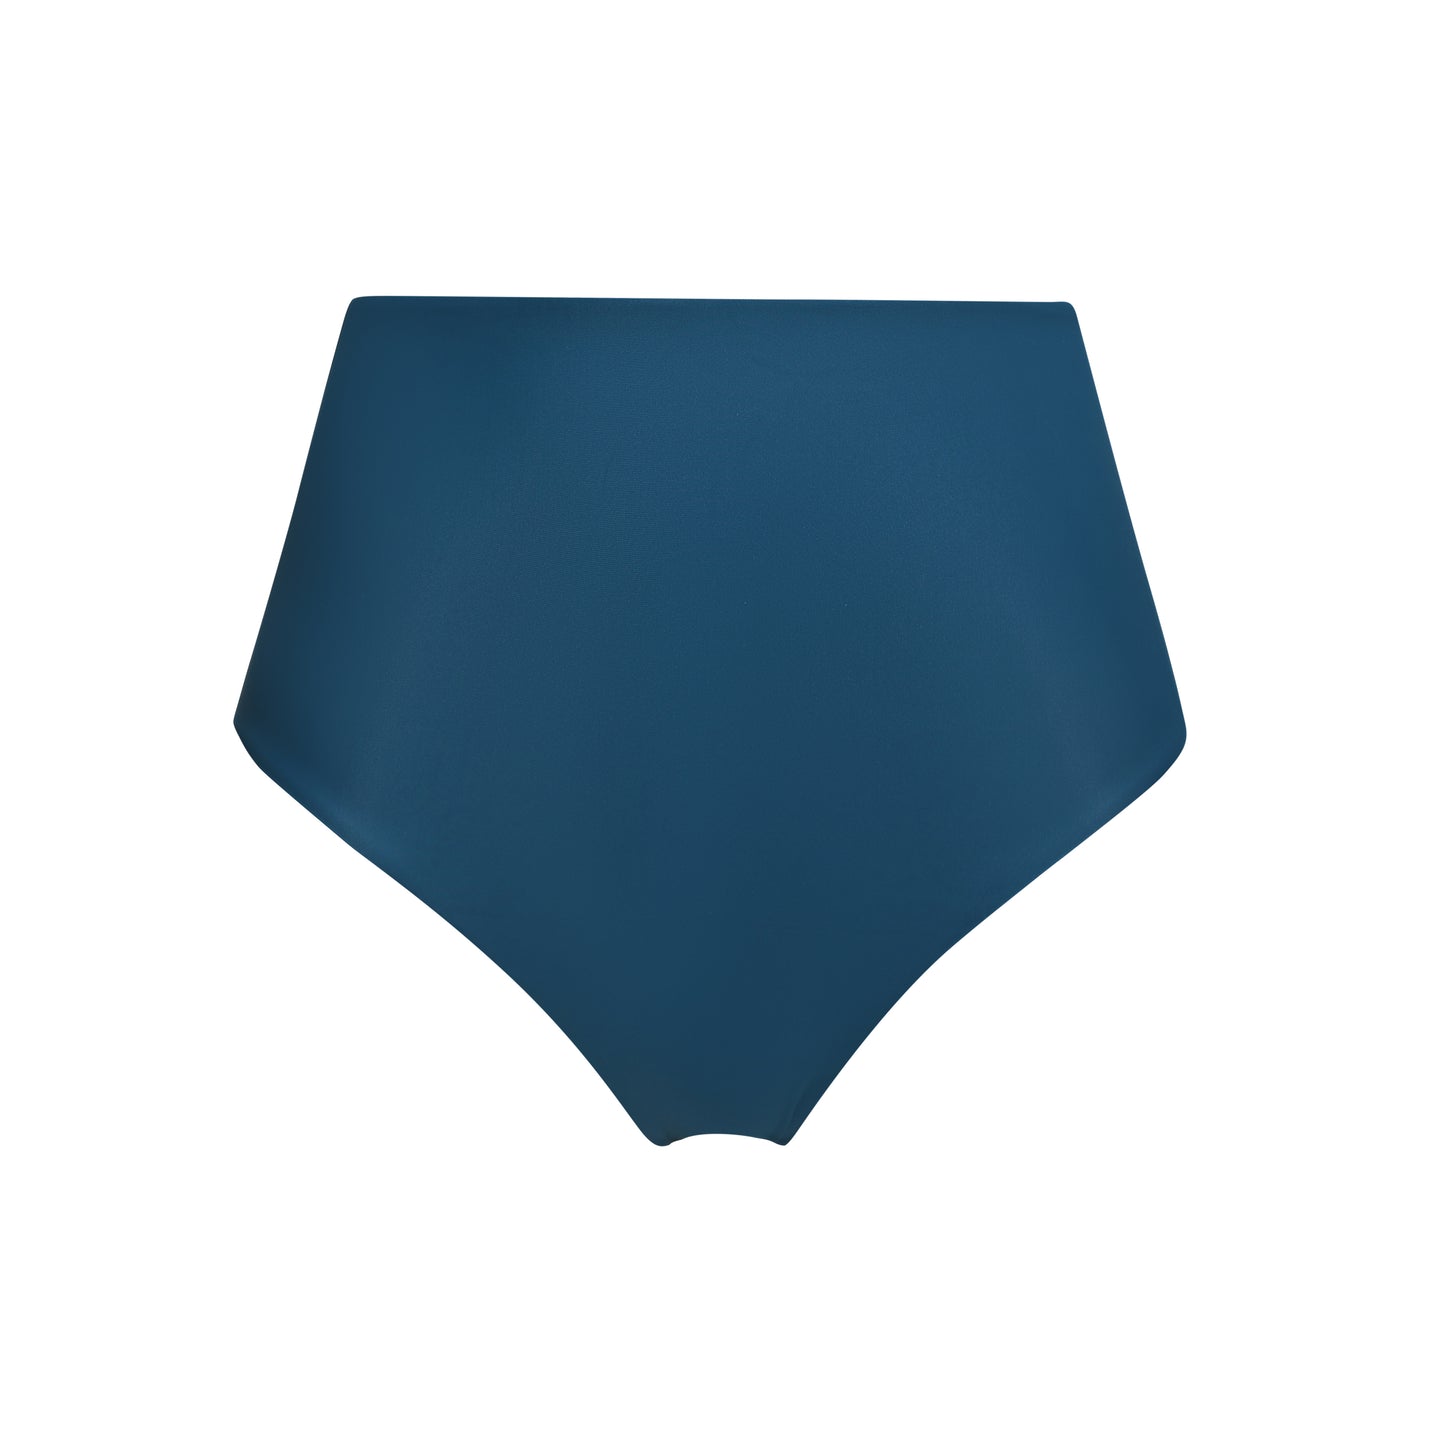 high waist bikini bottom brief seamless surf teal blue